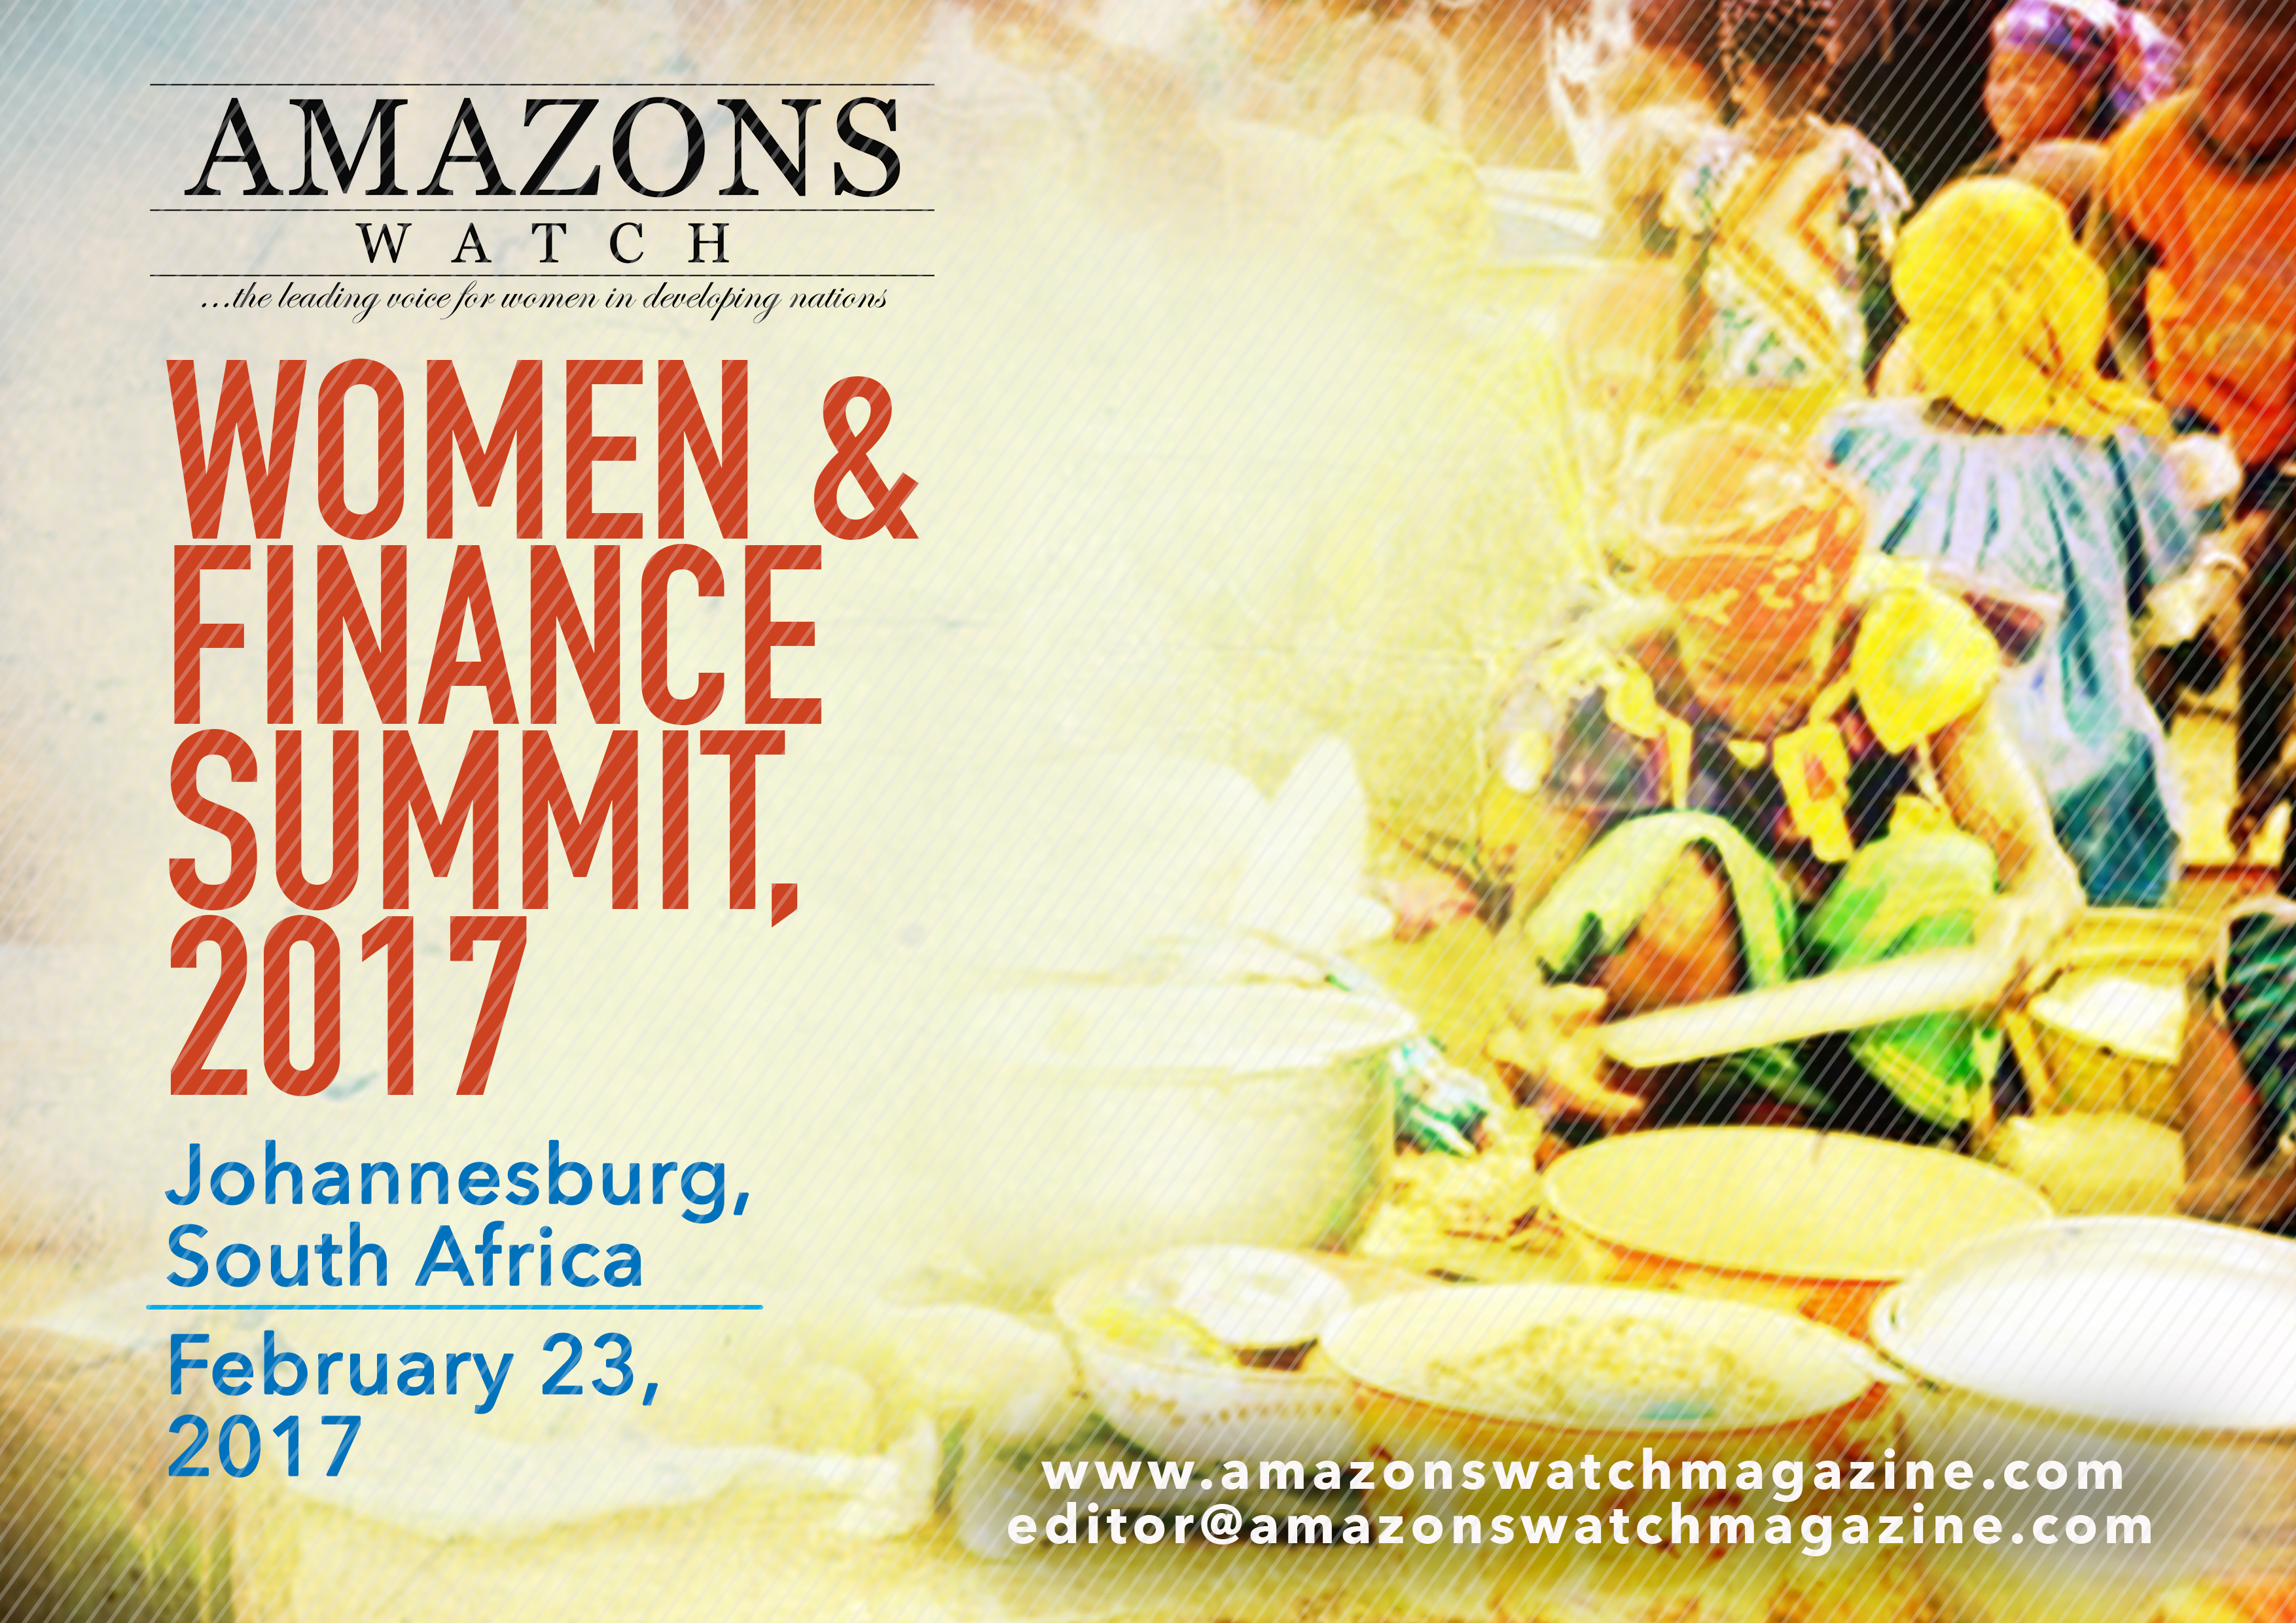 WOMEN & FINANCE SUMMIT 2017